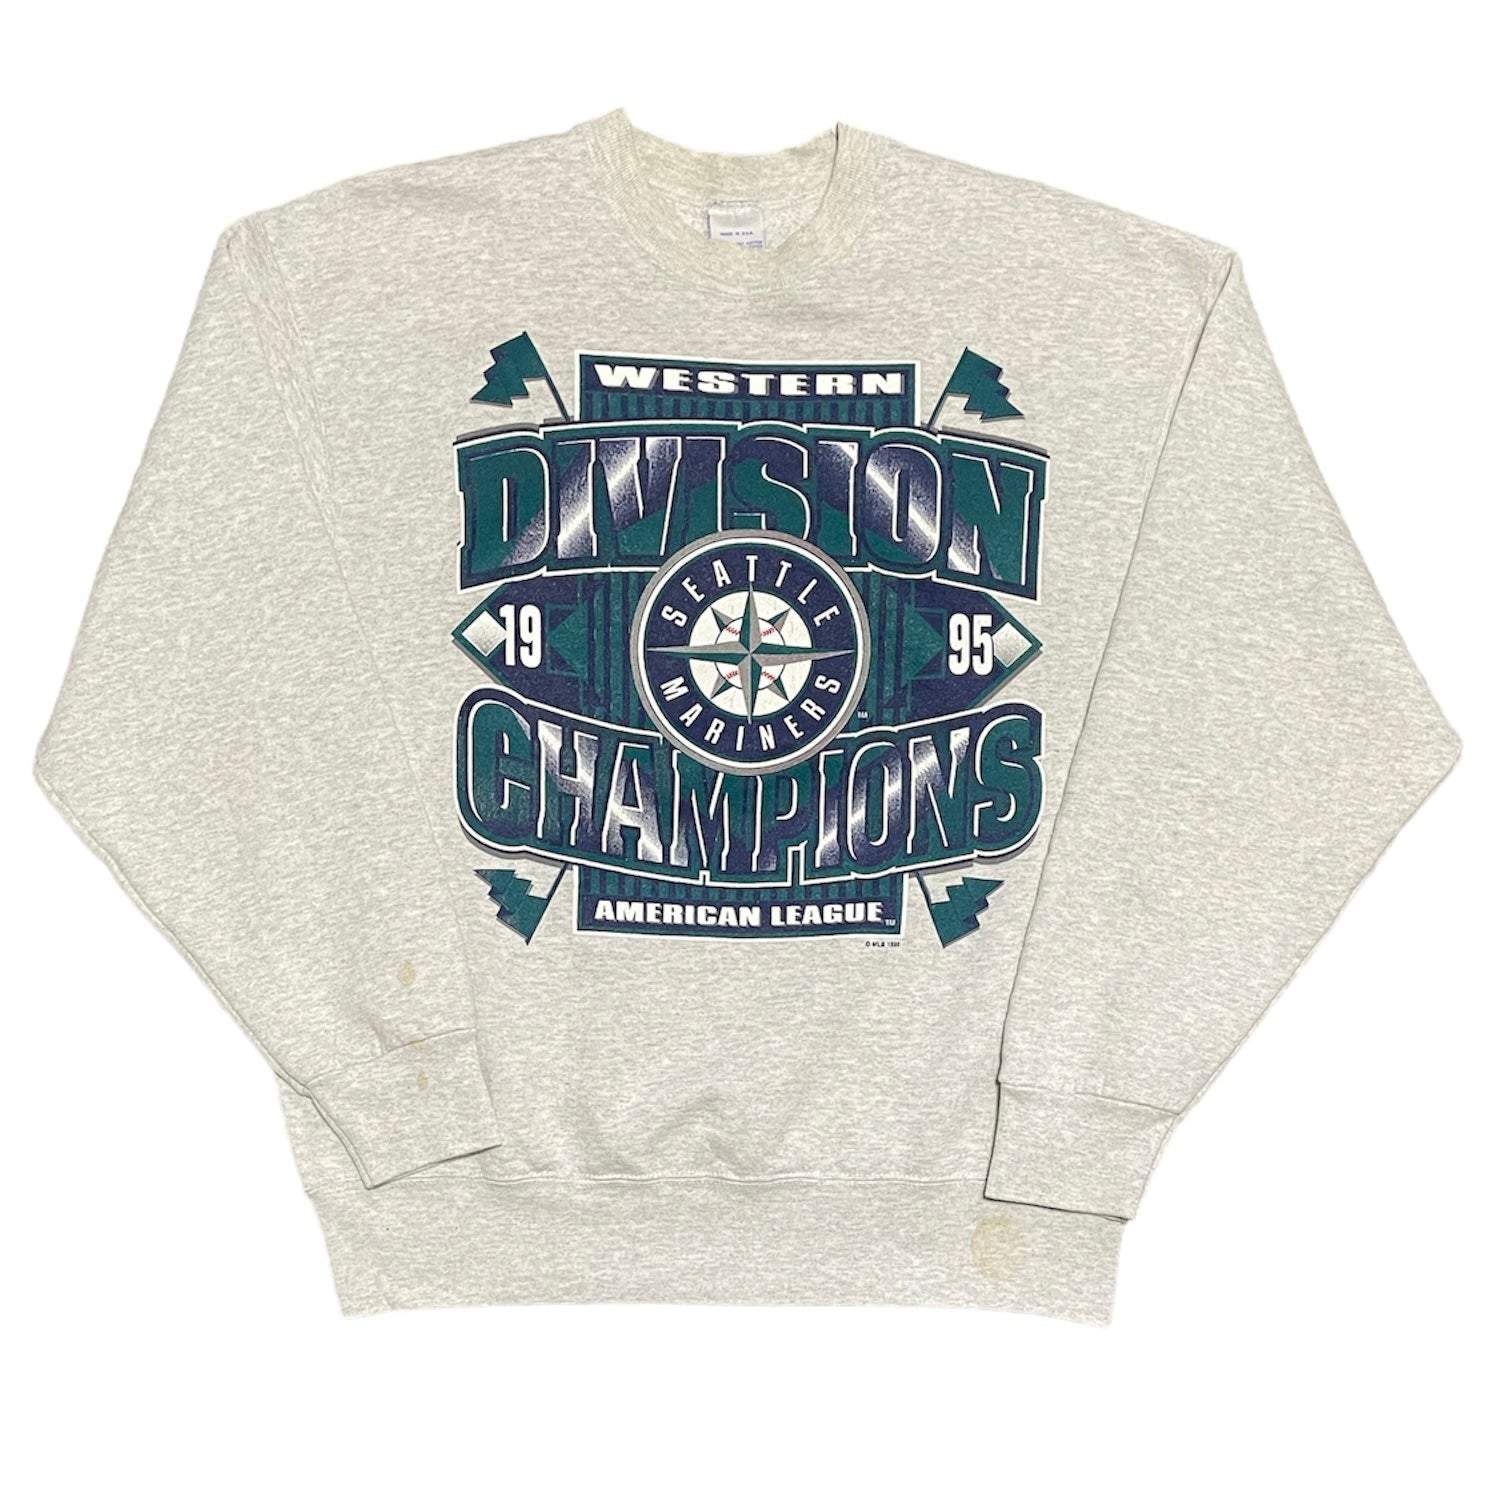 Vintage Seattle Mariner Crewneck Sweatshirt / T-shirt 